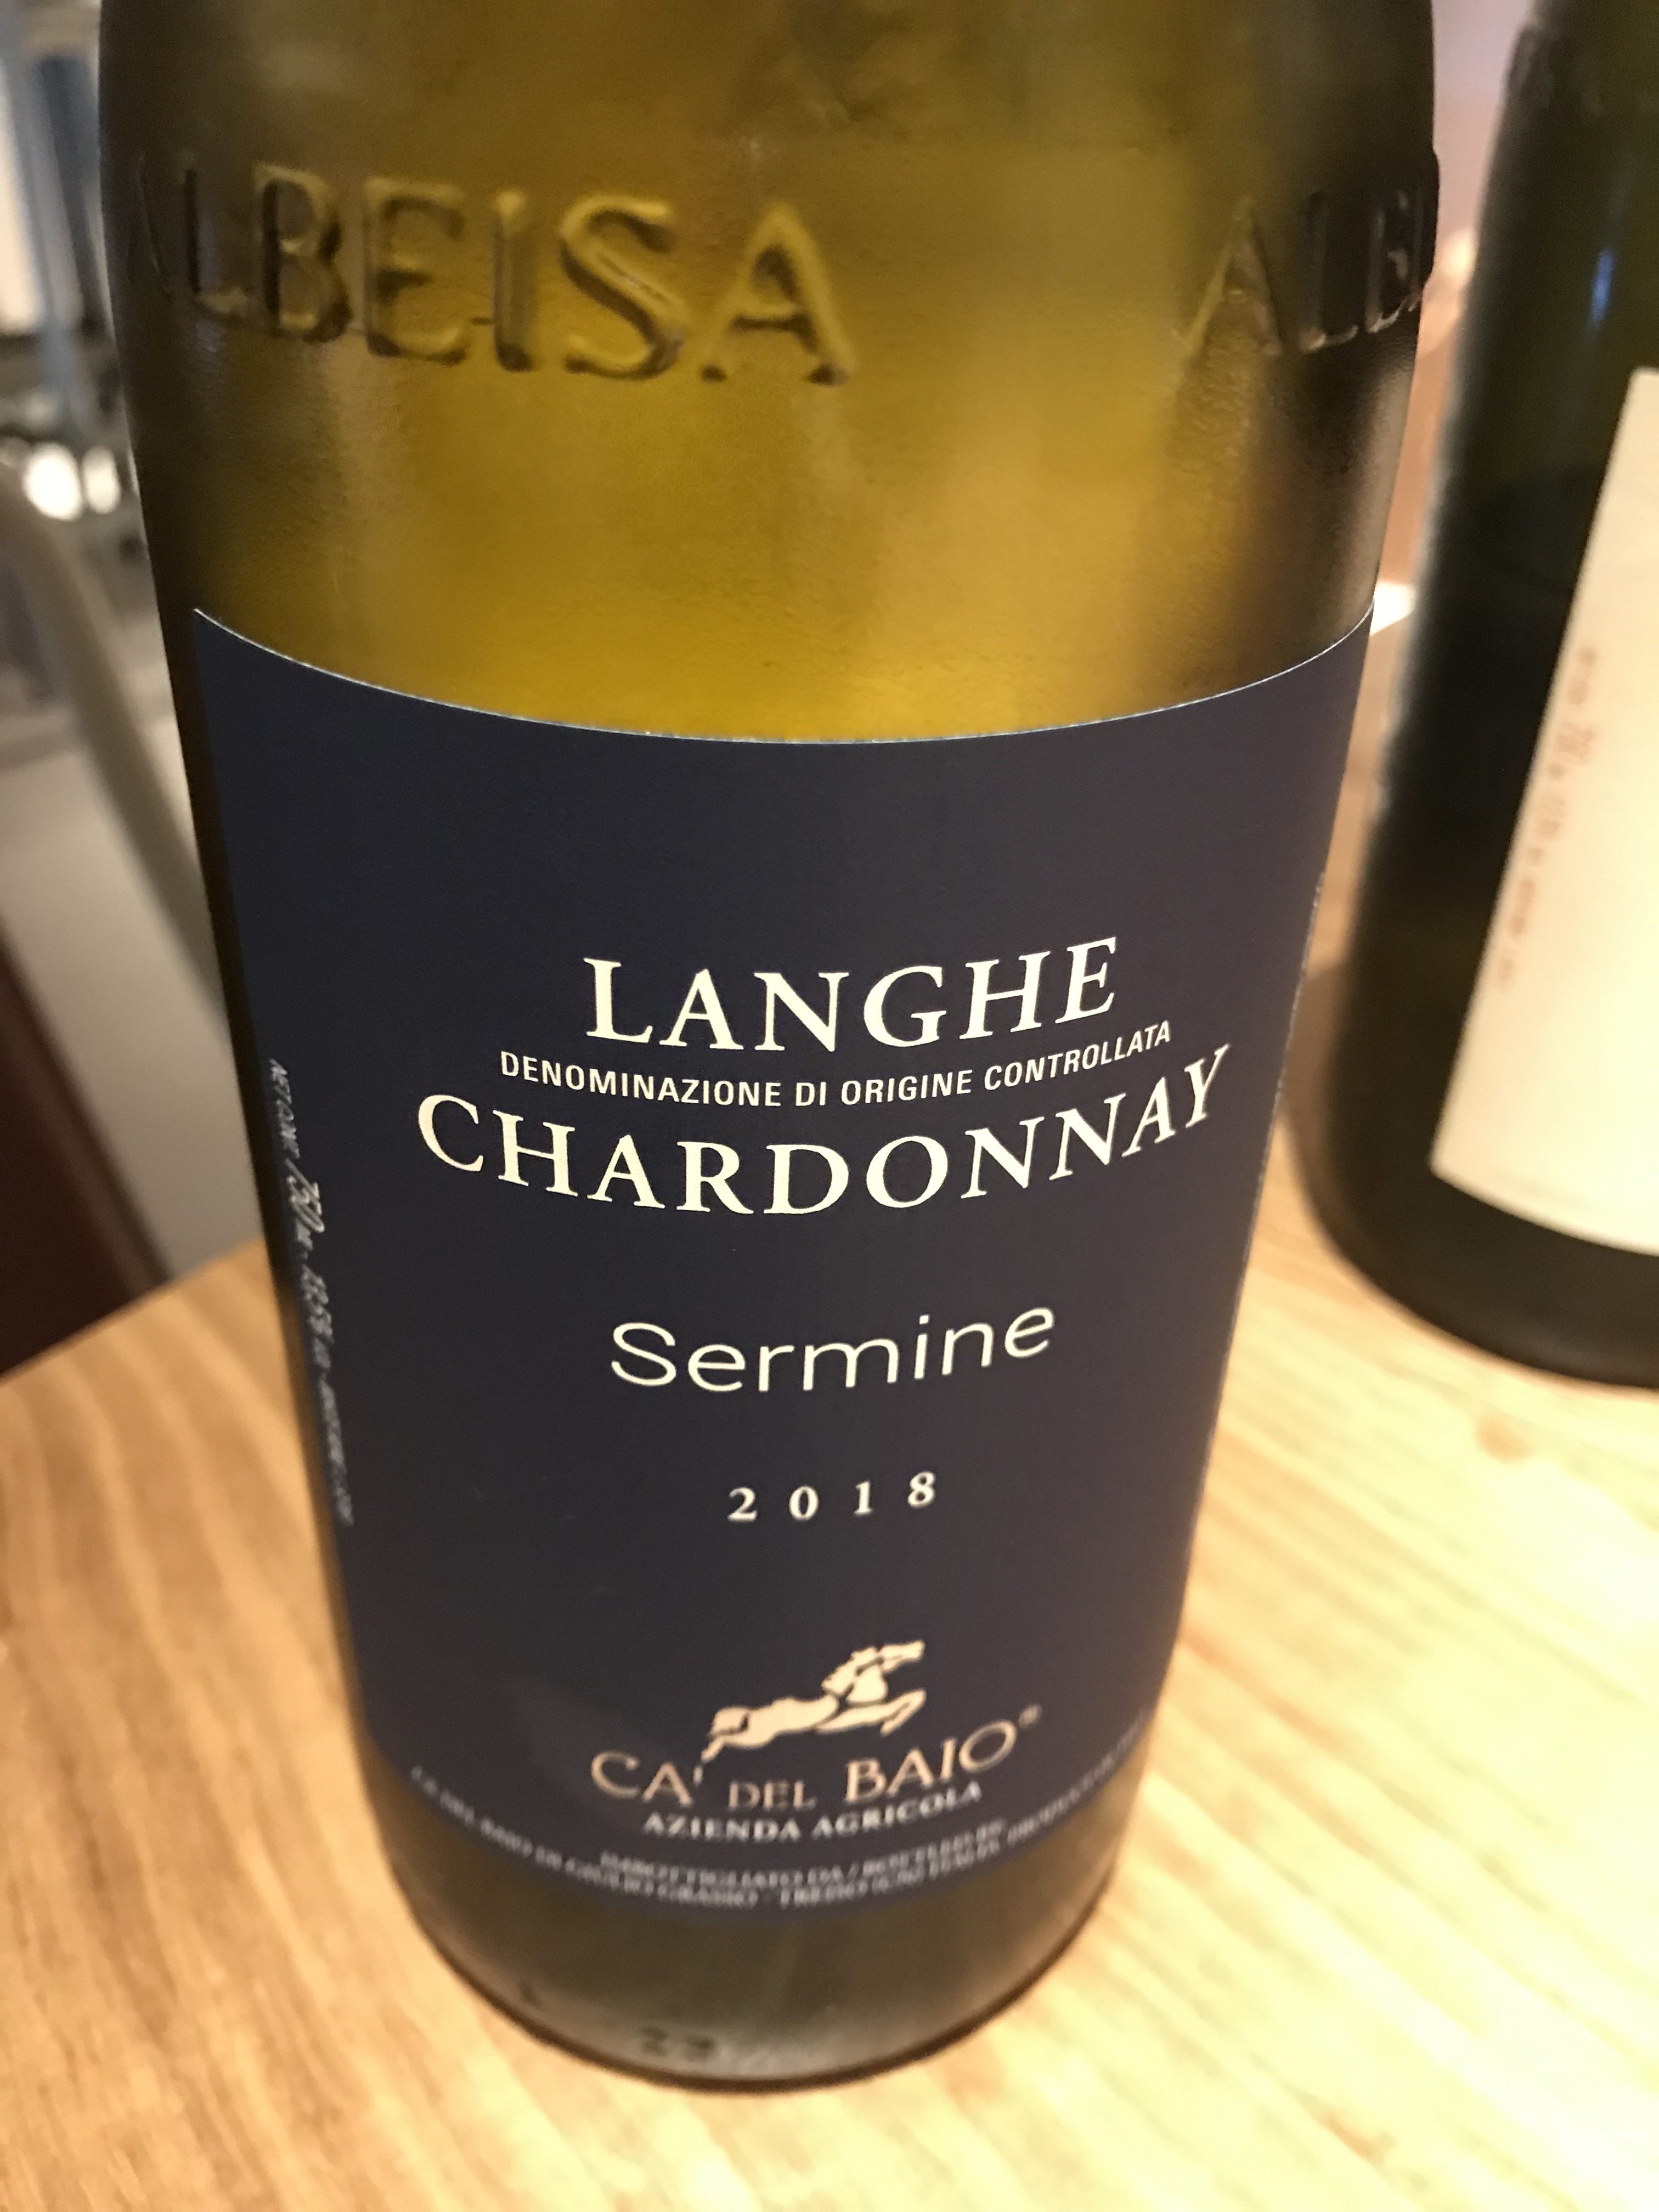 LCa del Baio Langhe Chardonnay 